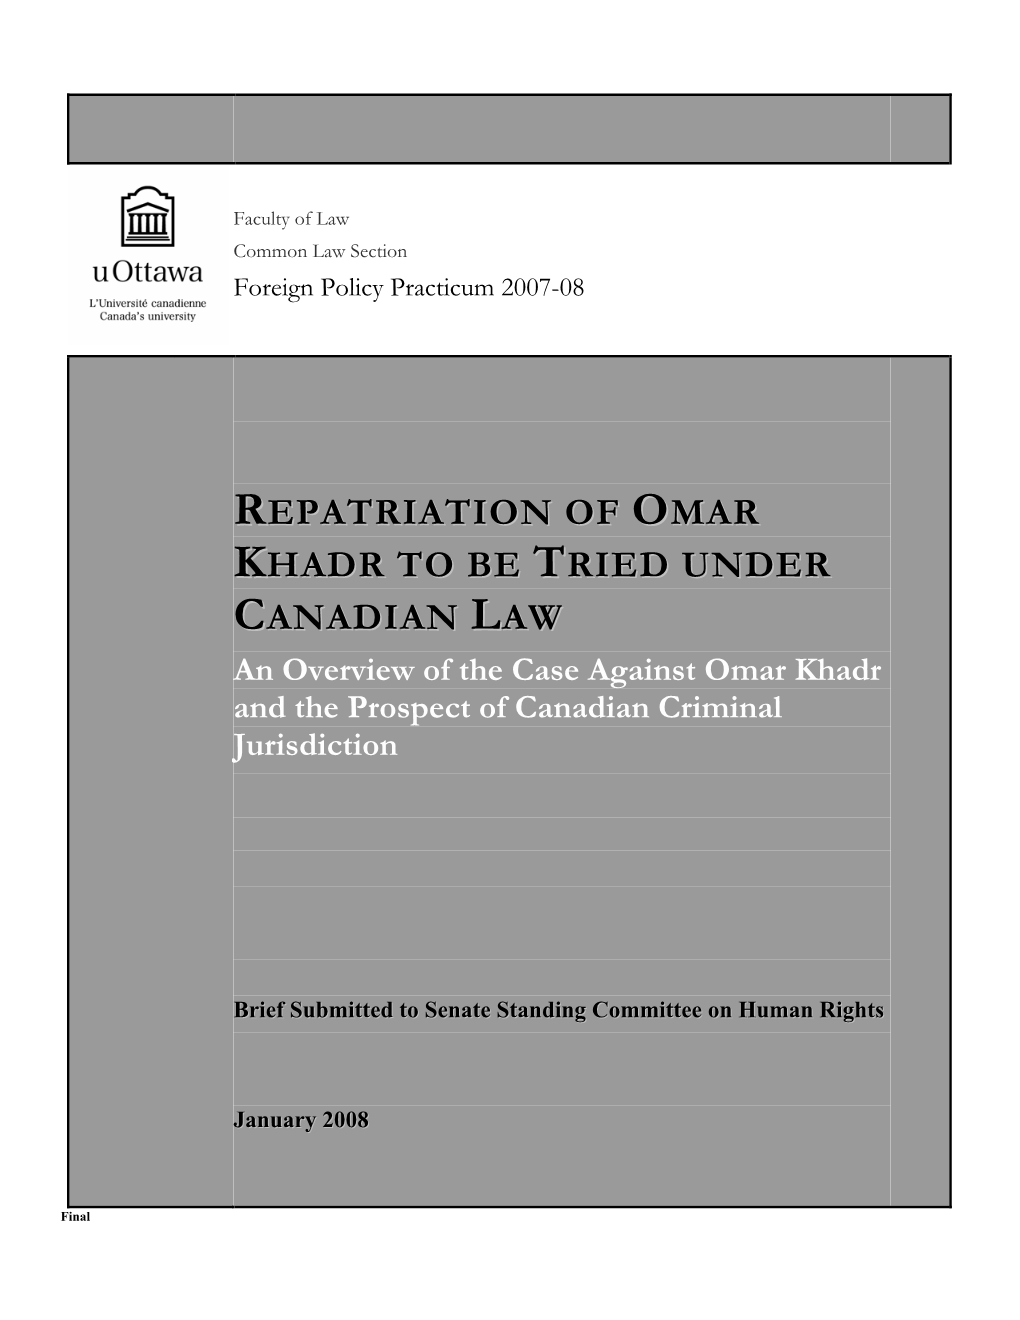 Repatriation of Omar Khadr to Be Tried Under